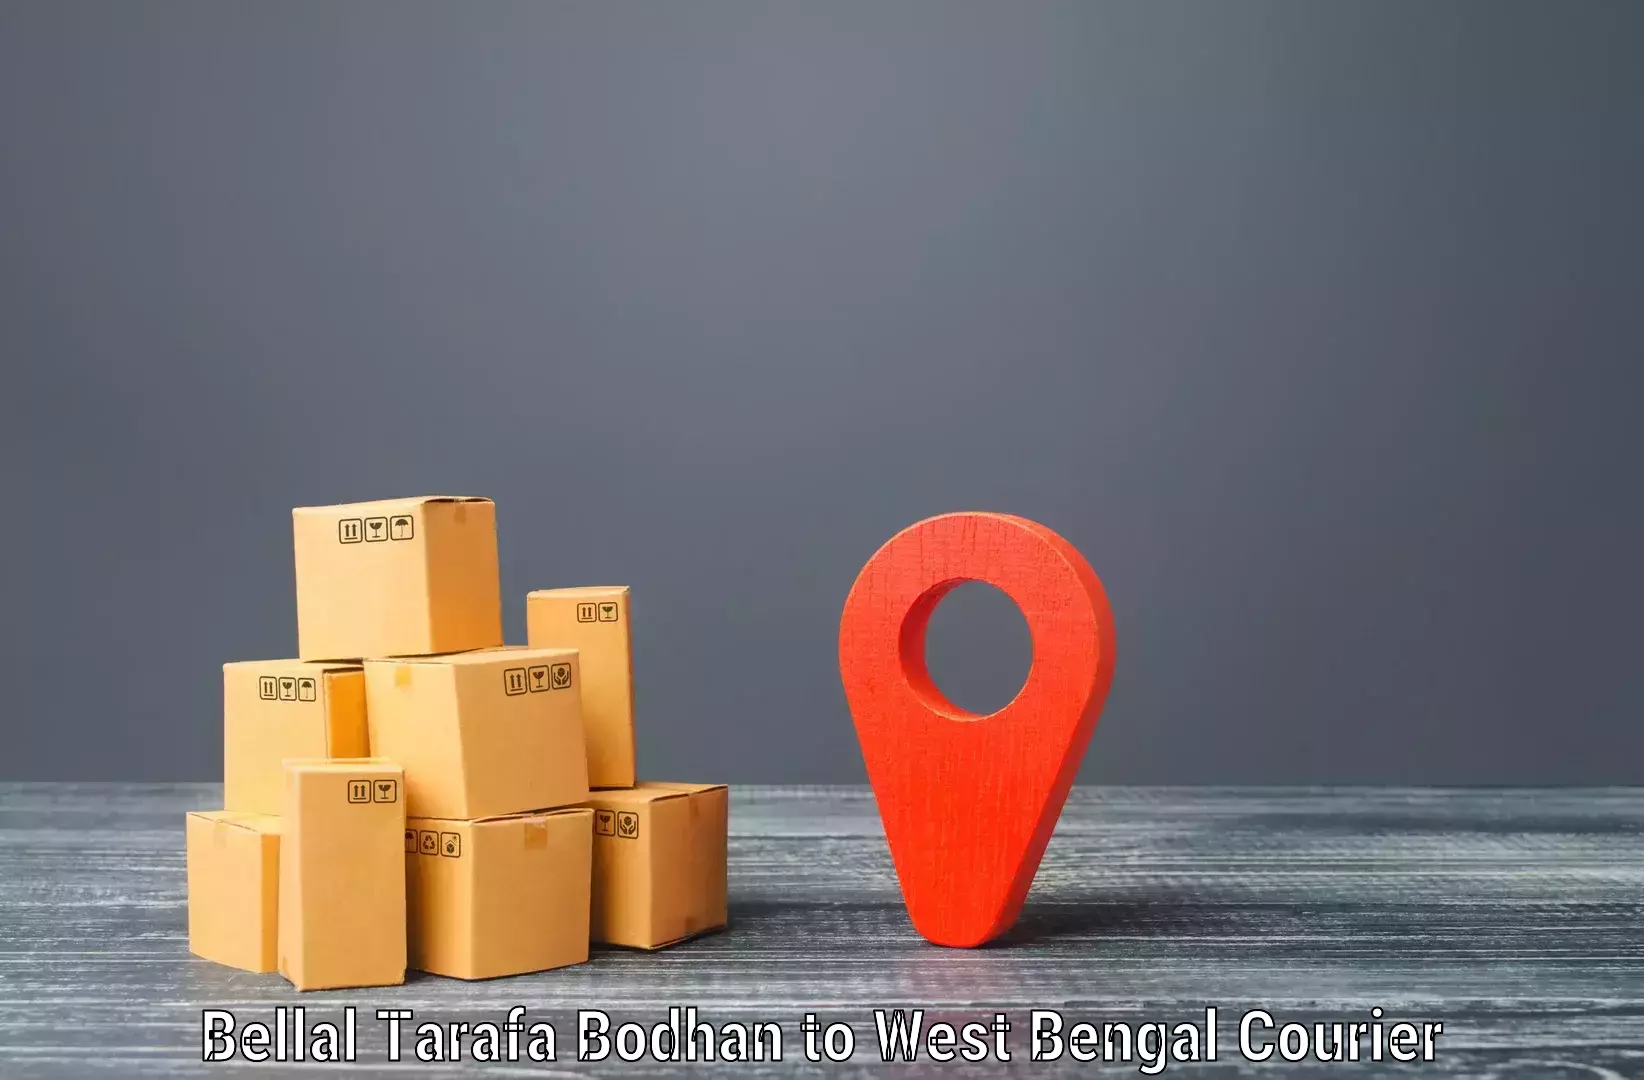 Courier service innovation Bellal Tarafa Bodhan to Joypul